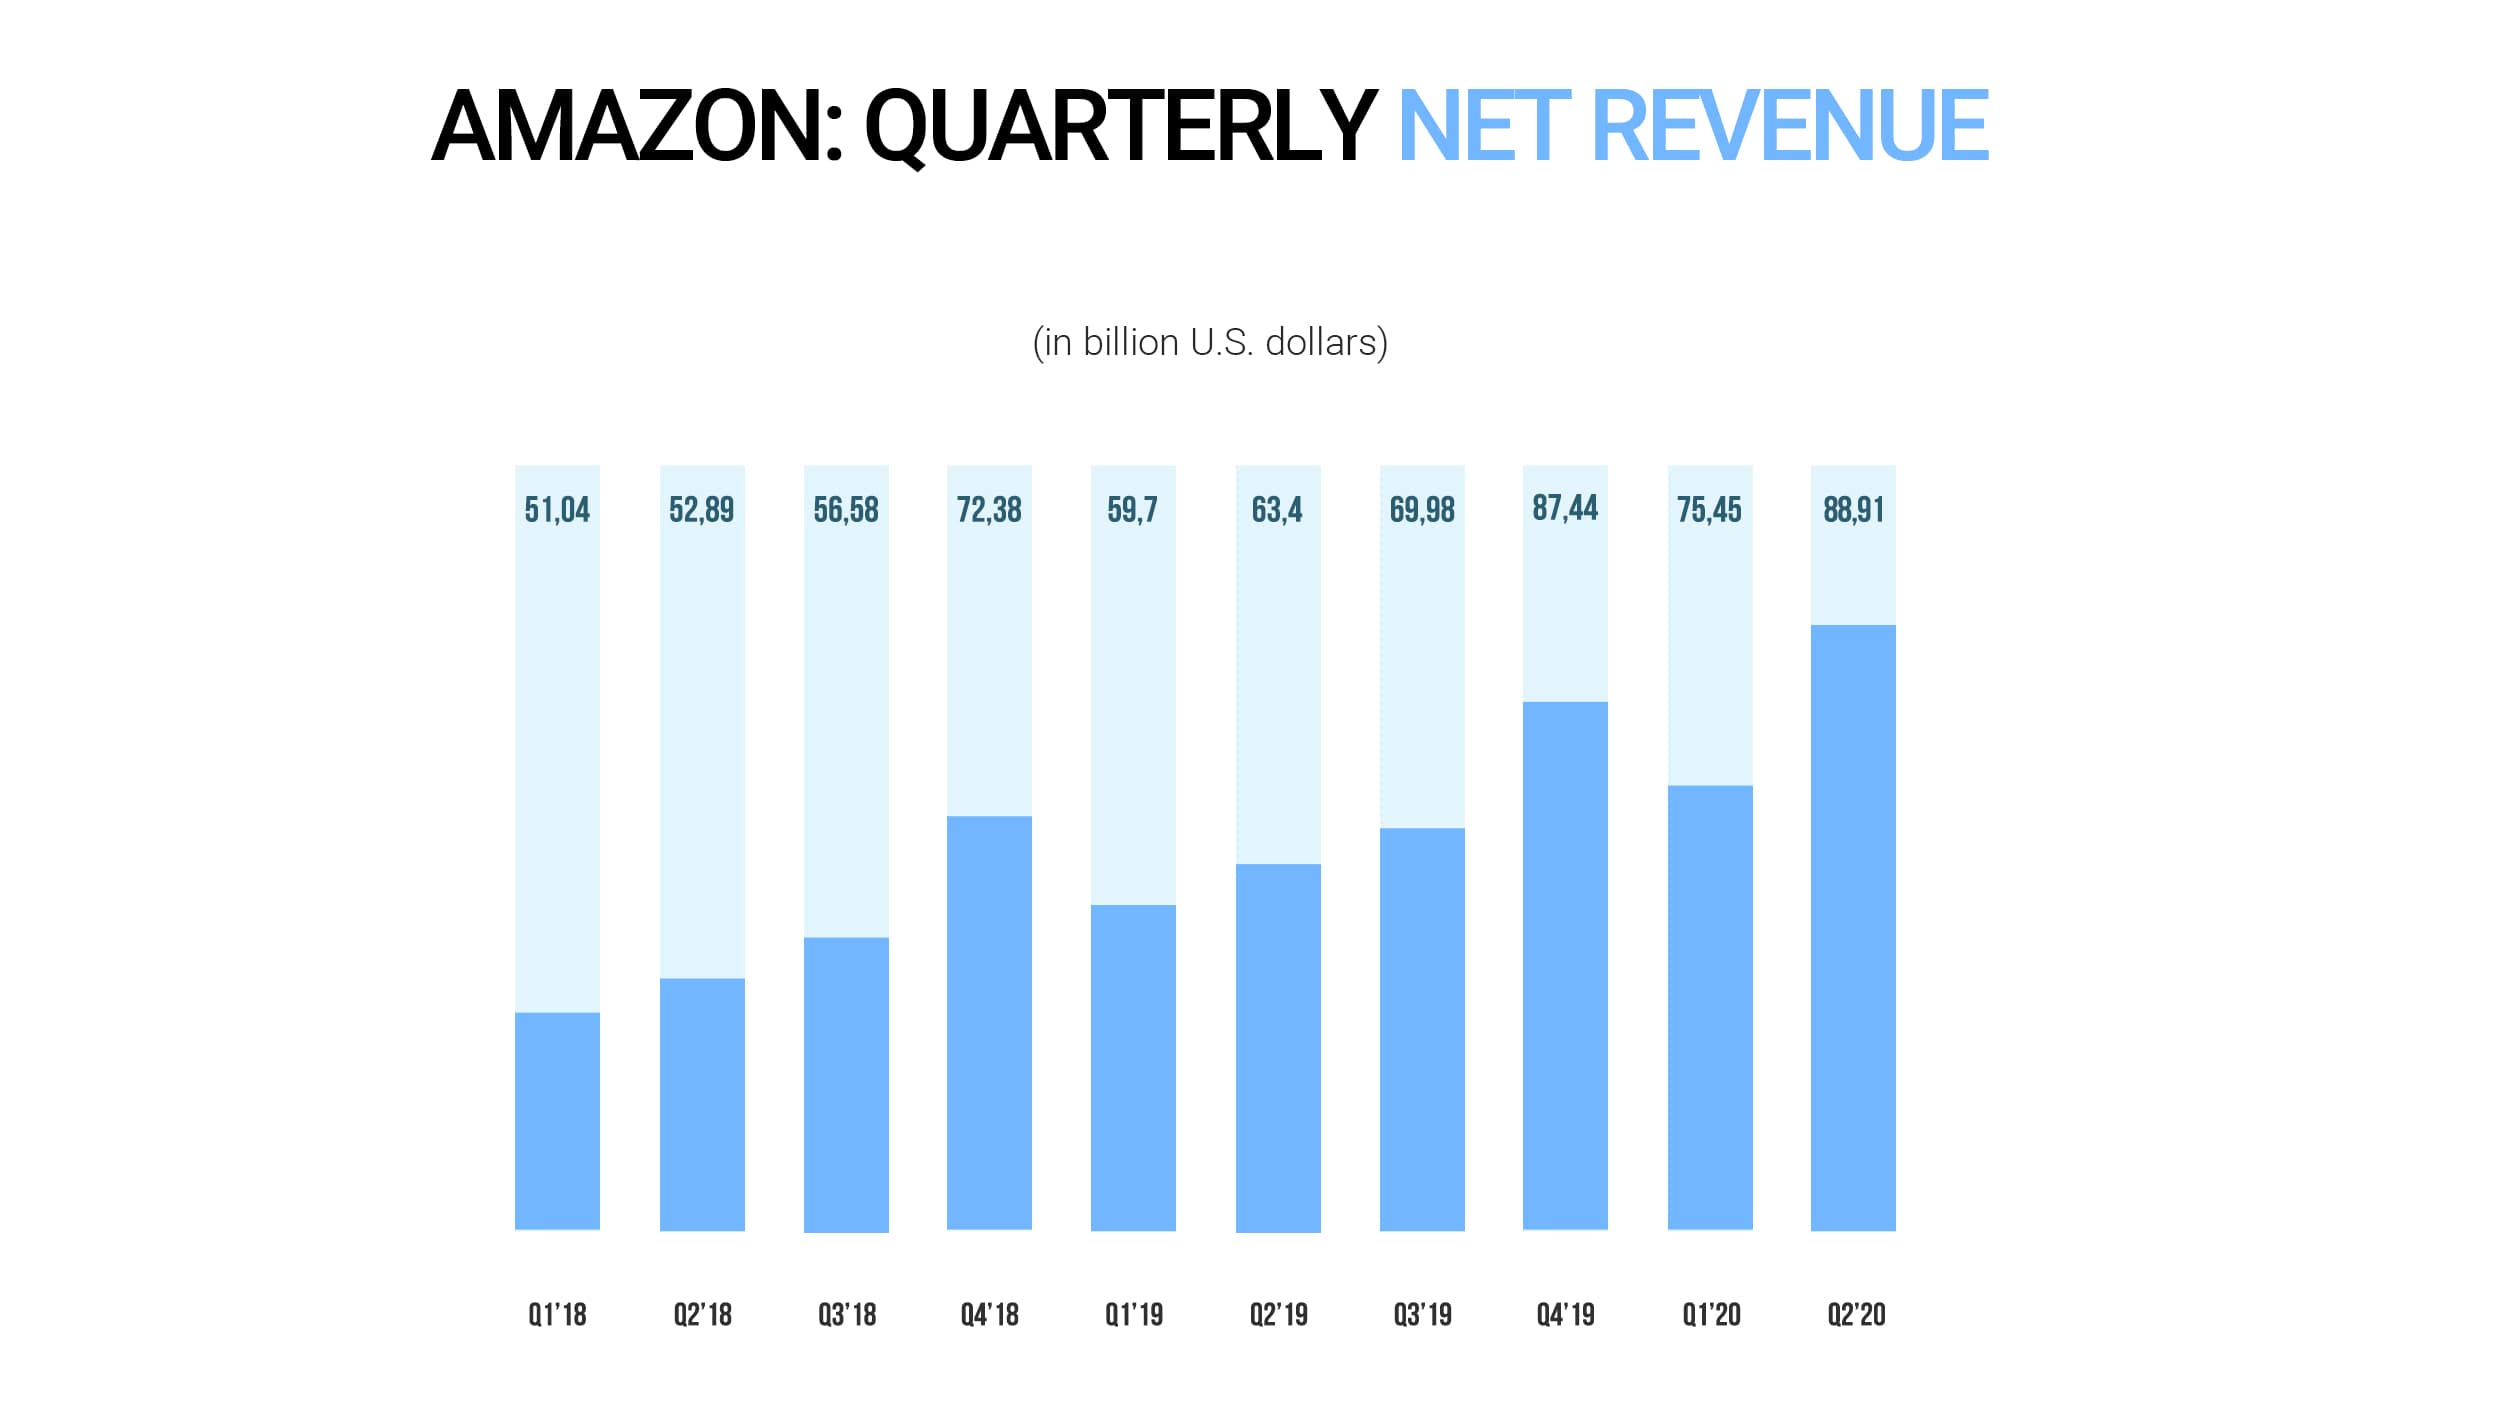 Amazon quarterly net revenue 20018-2020